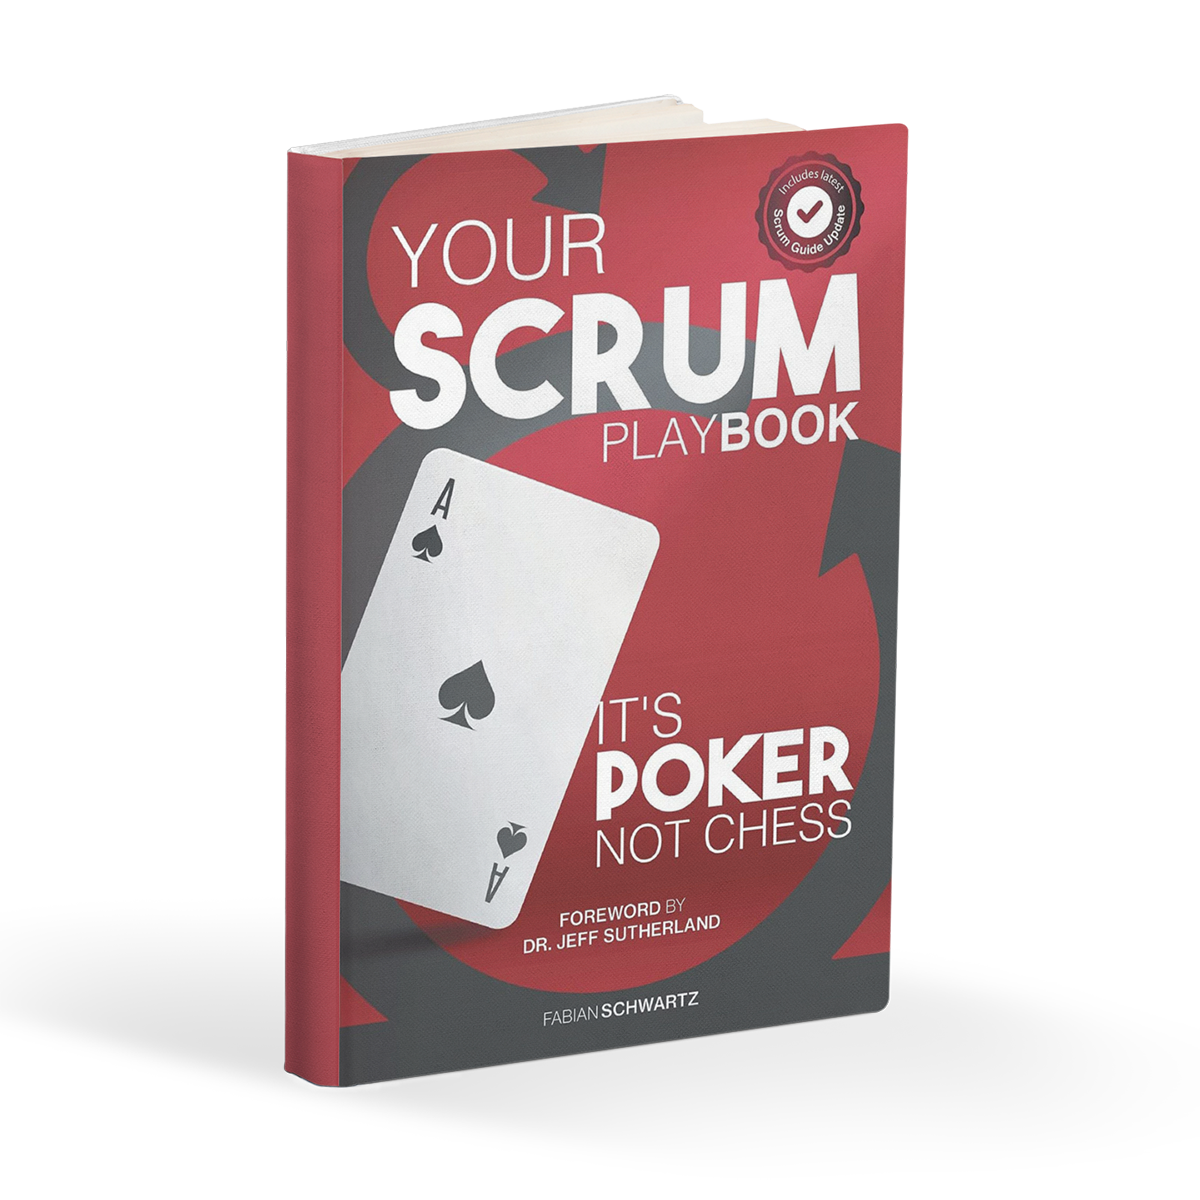 scrum poker not chess book fabian schwartz